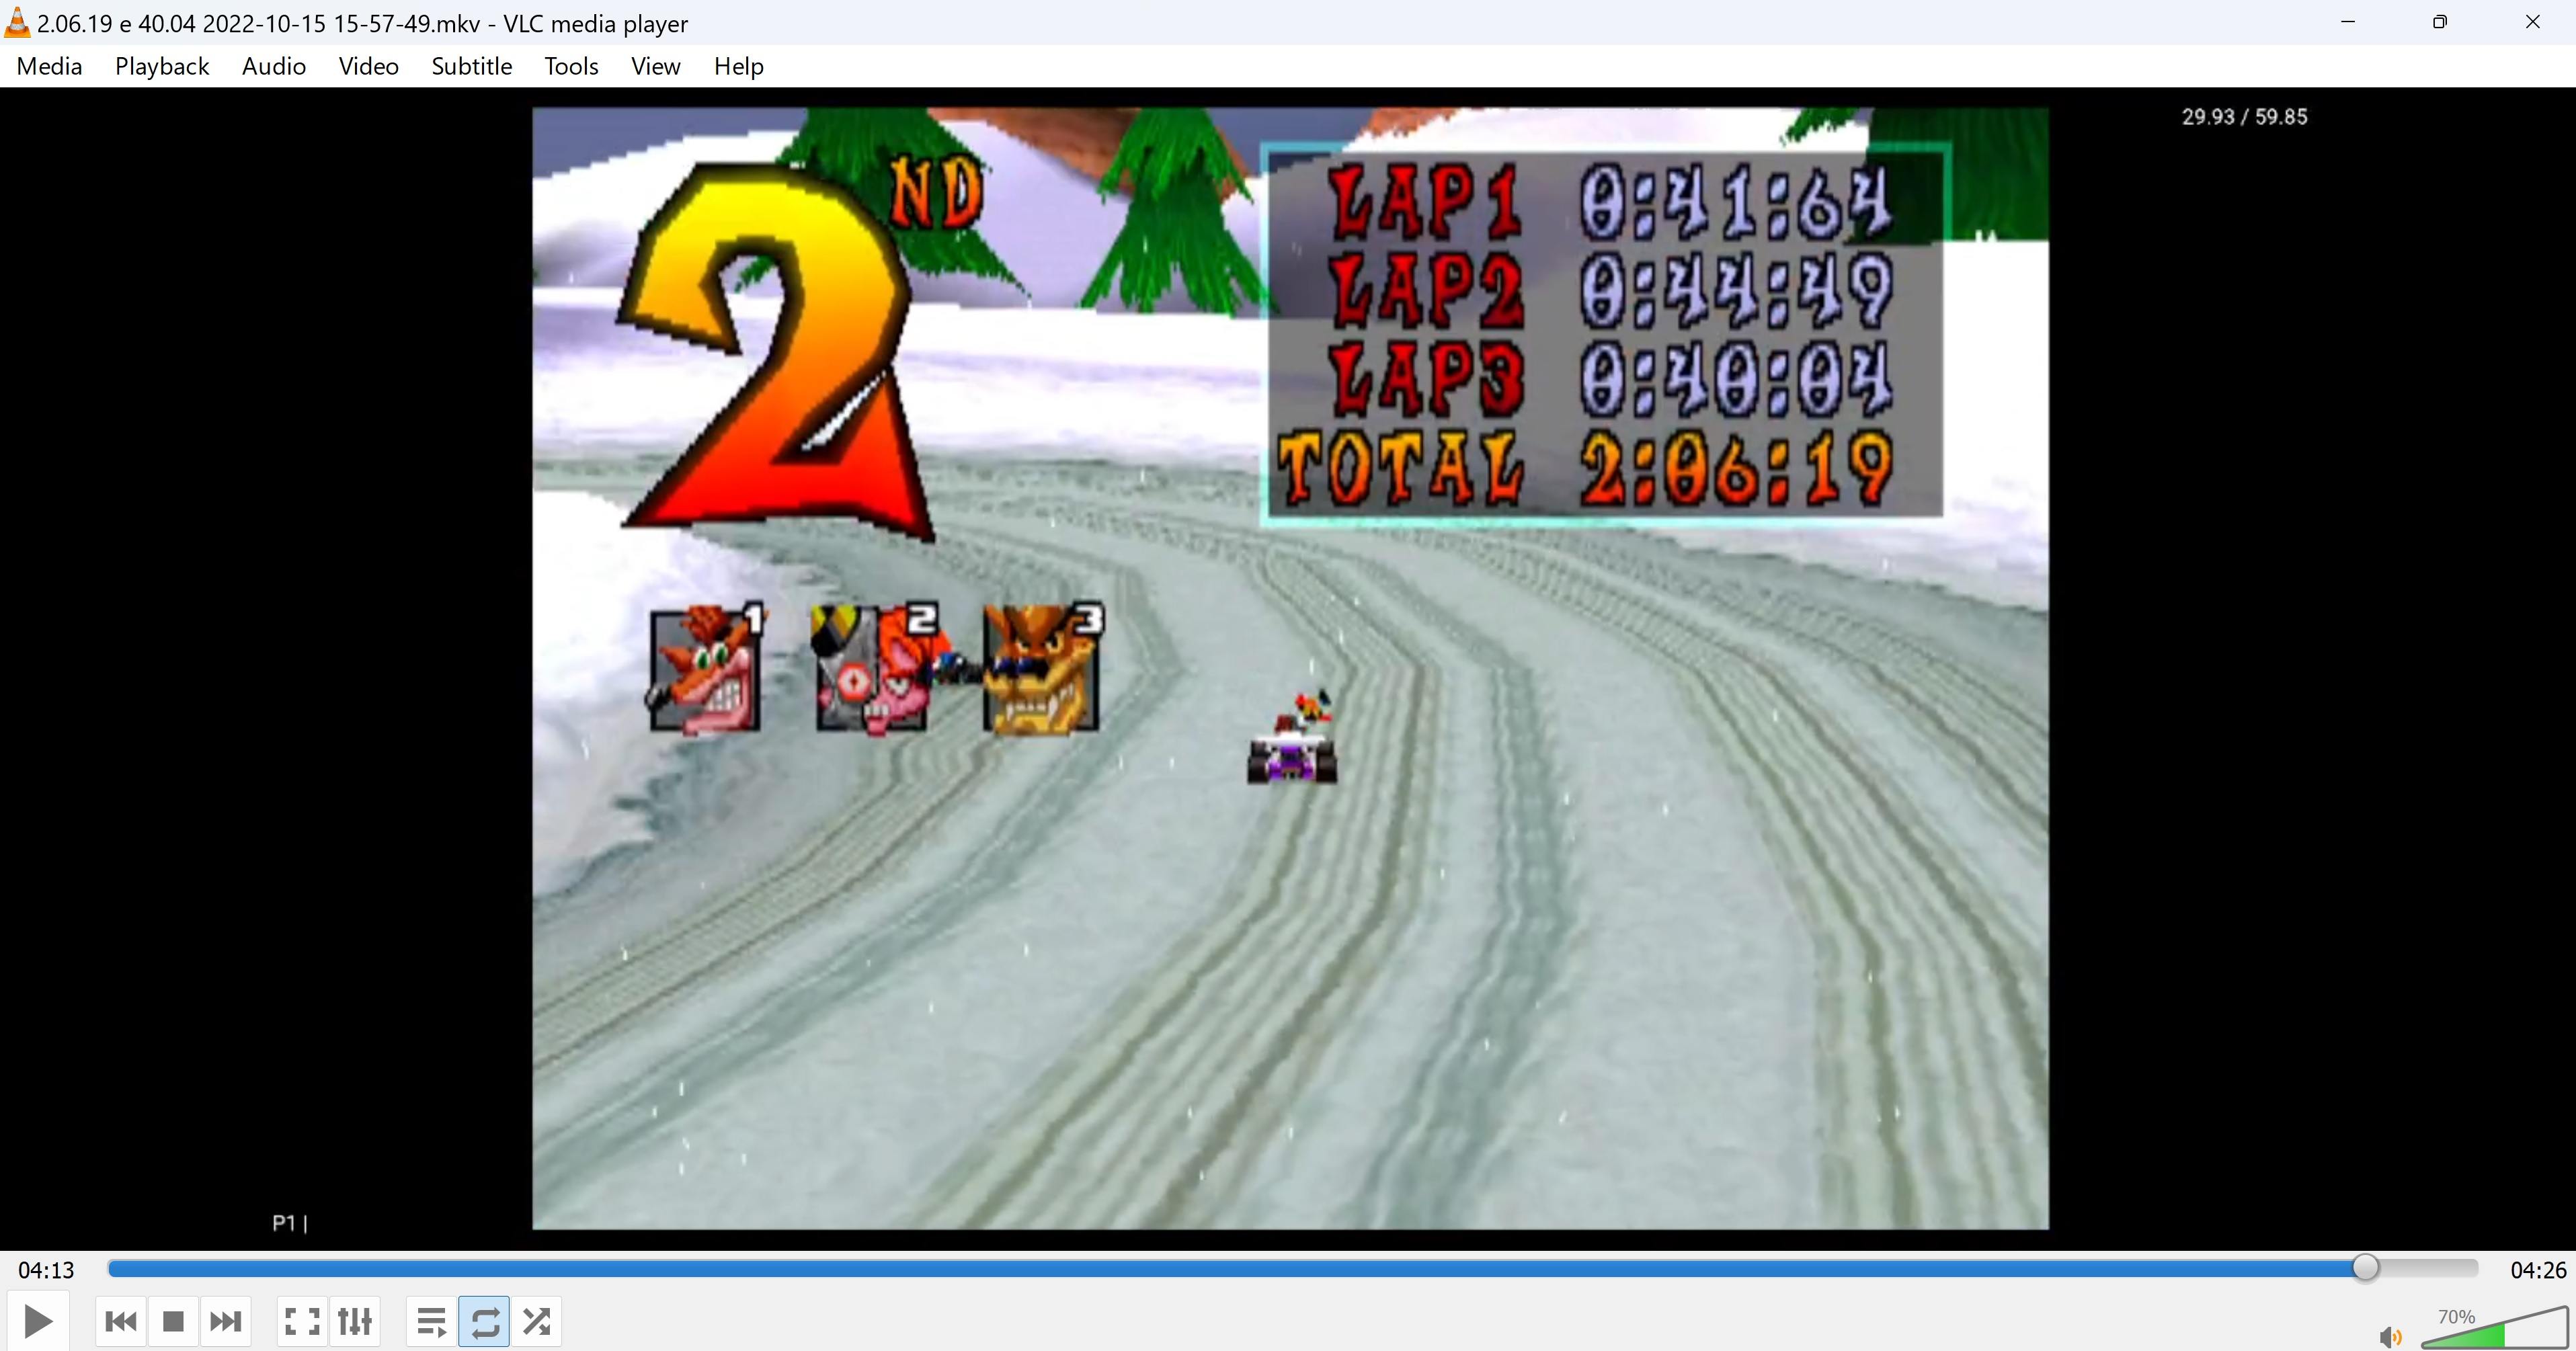 CTR Crash Team Racing: Arcade: Blizzard Bluff: Single: Medium: 3 Laps [Race Time] time of 0:02:06.19